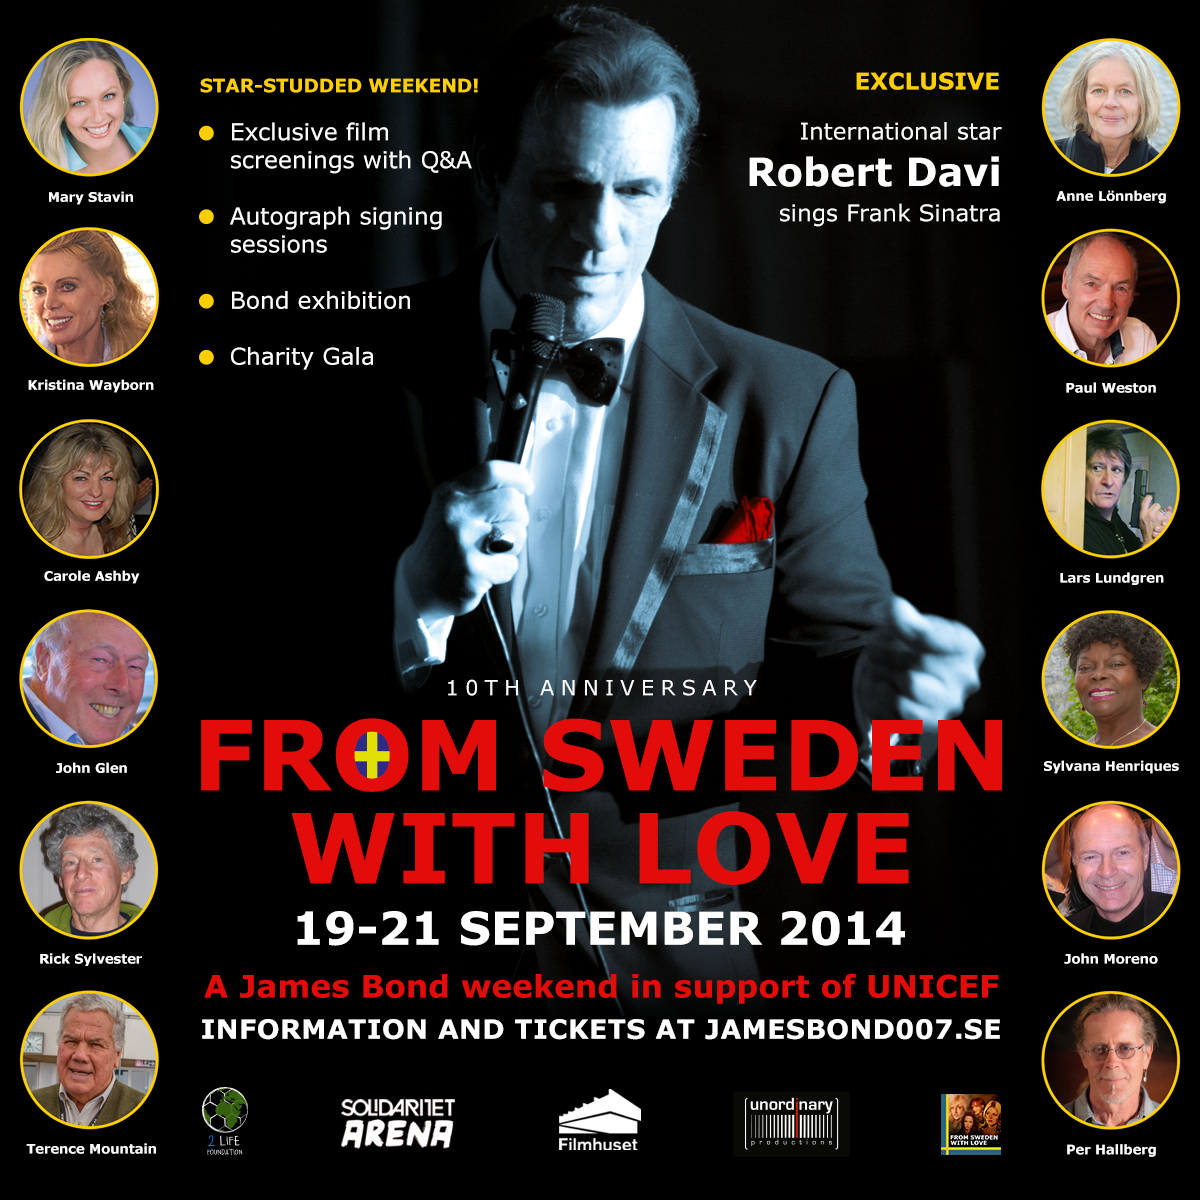 007 Event In Sweden In September The James Bond Dossier